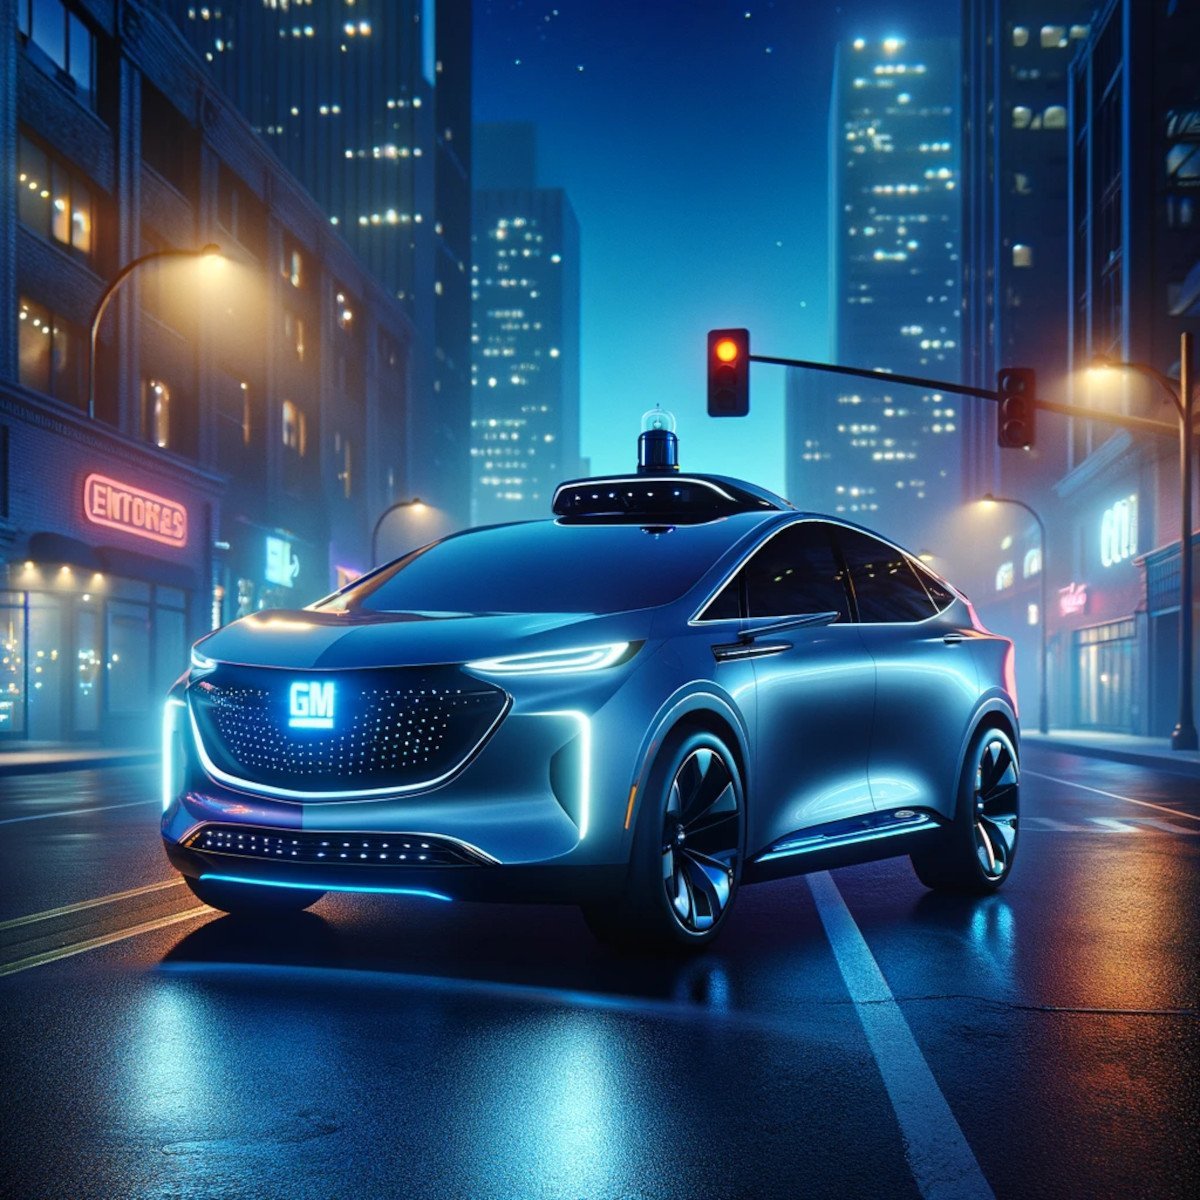 sleek-futuristic-looking-gm-autonomous-vehicle-parked-on-a-city-street-at-dusk